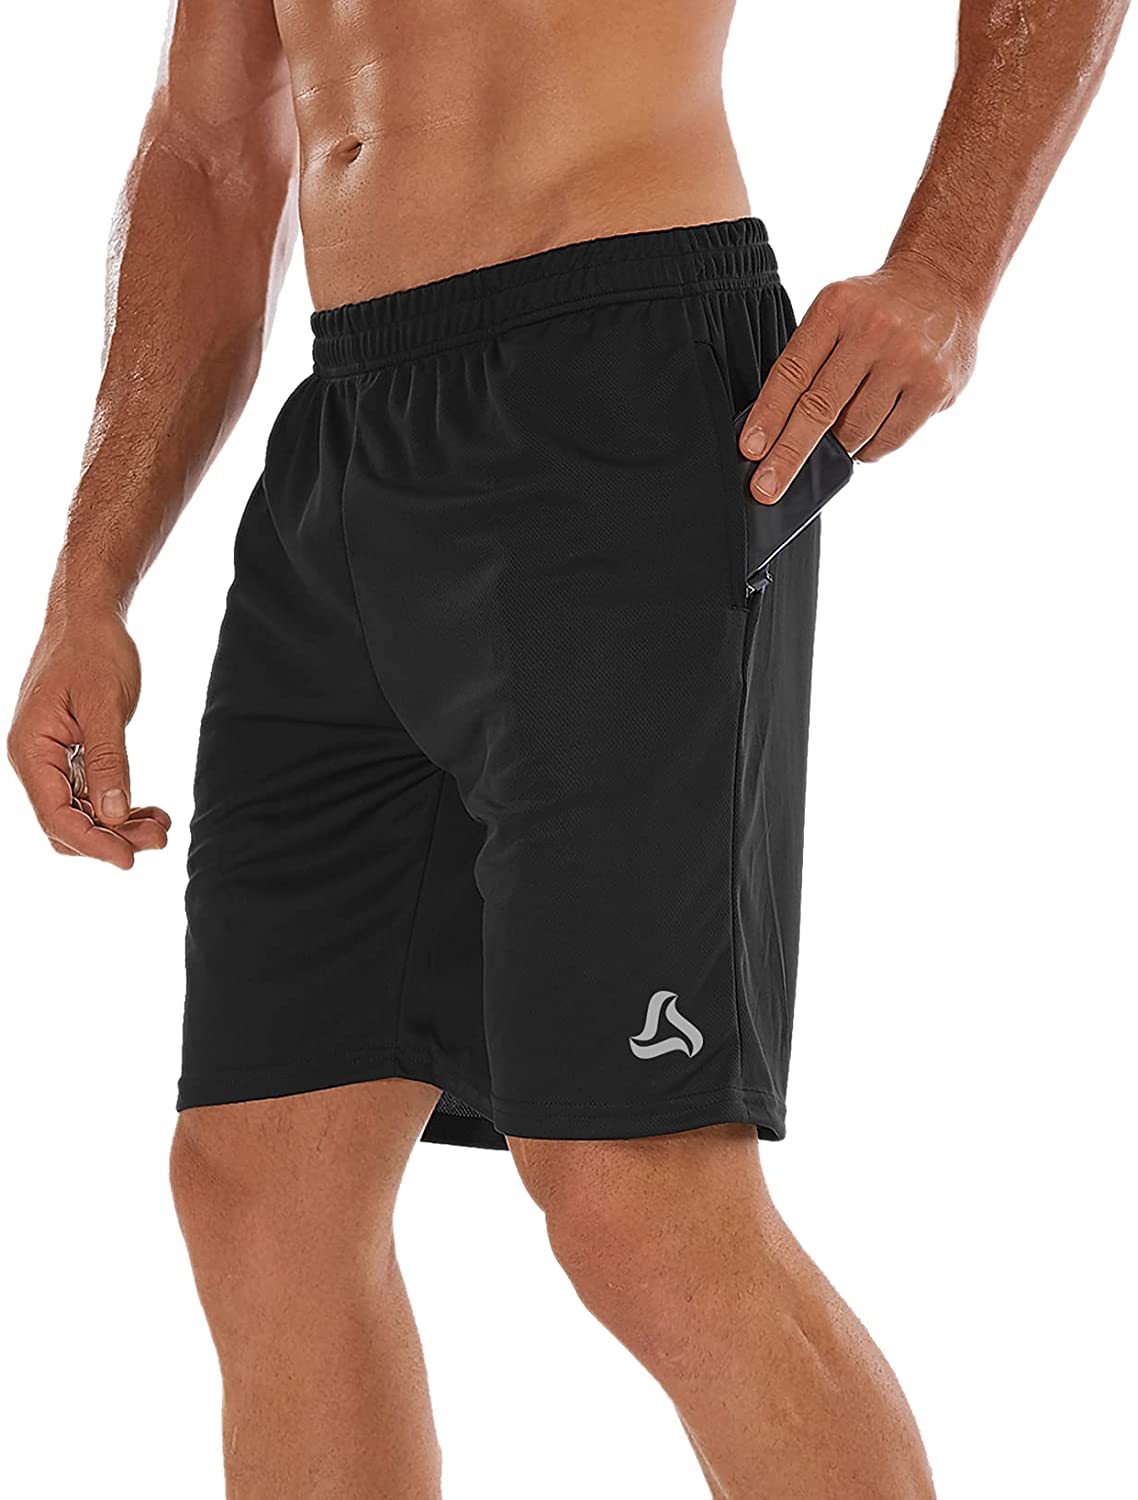 SILKWORLD Men's Running Shorts 7 Mesh Athletic Shorts with Zipper Pockets 